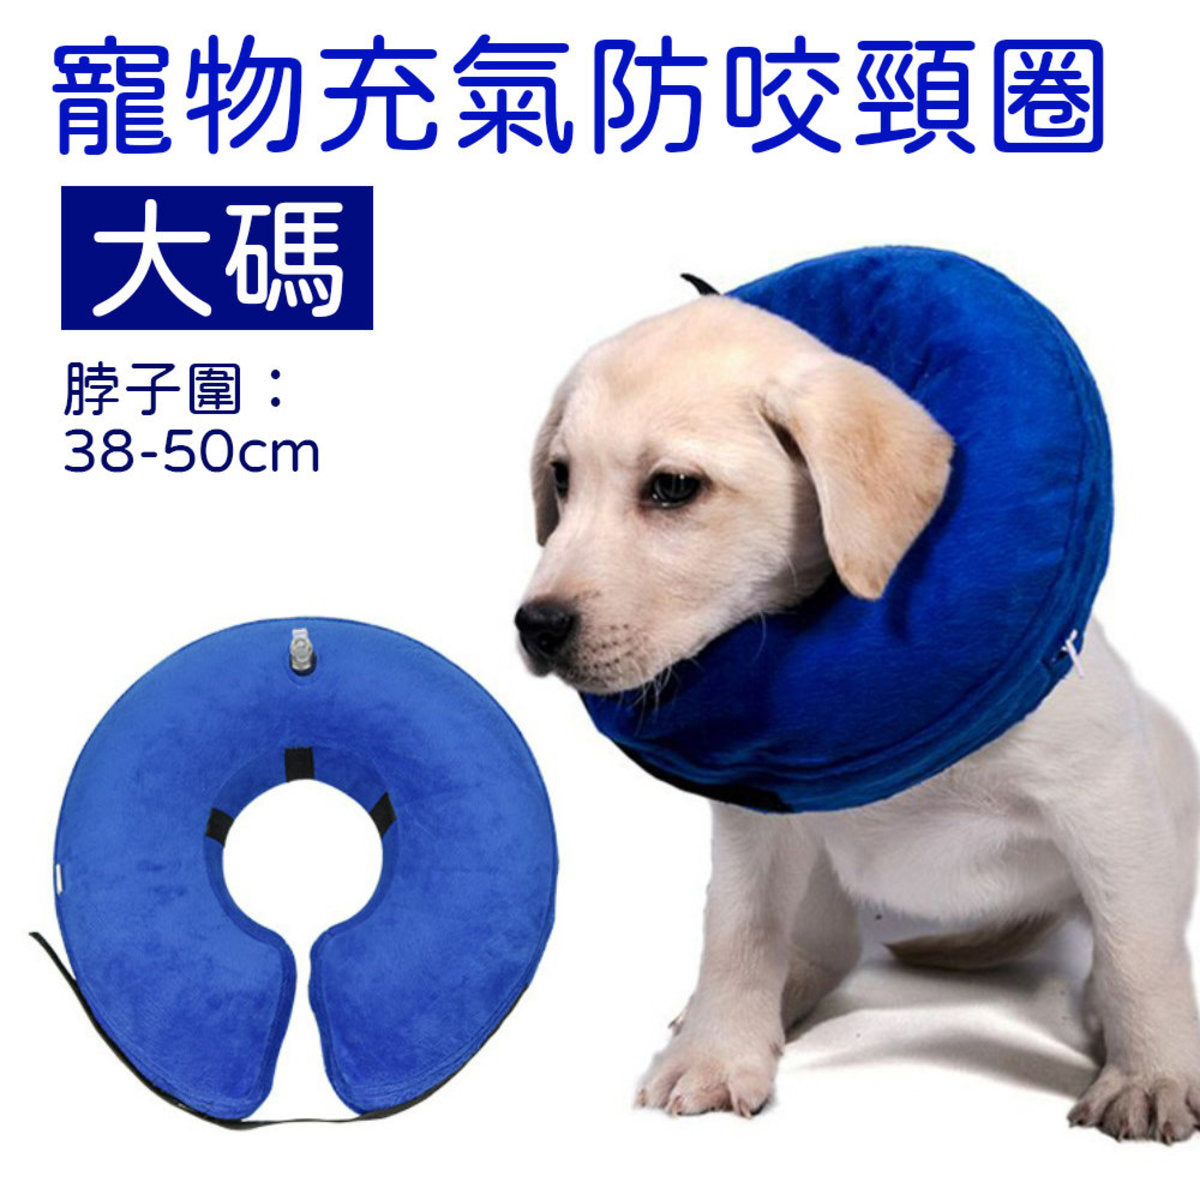 Adjustable pet inflatable anti-bite collar x1 - large size cat and dog pet supplies neck collar